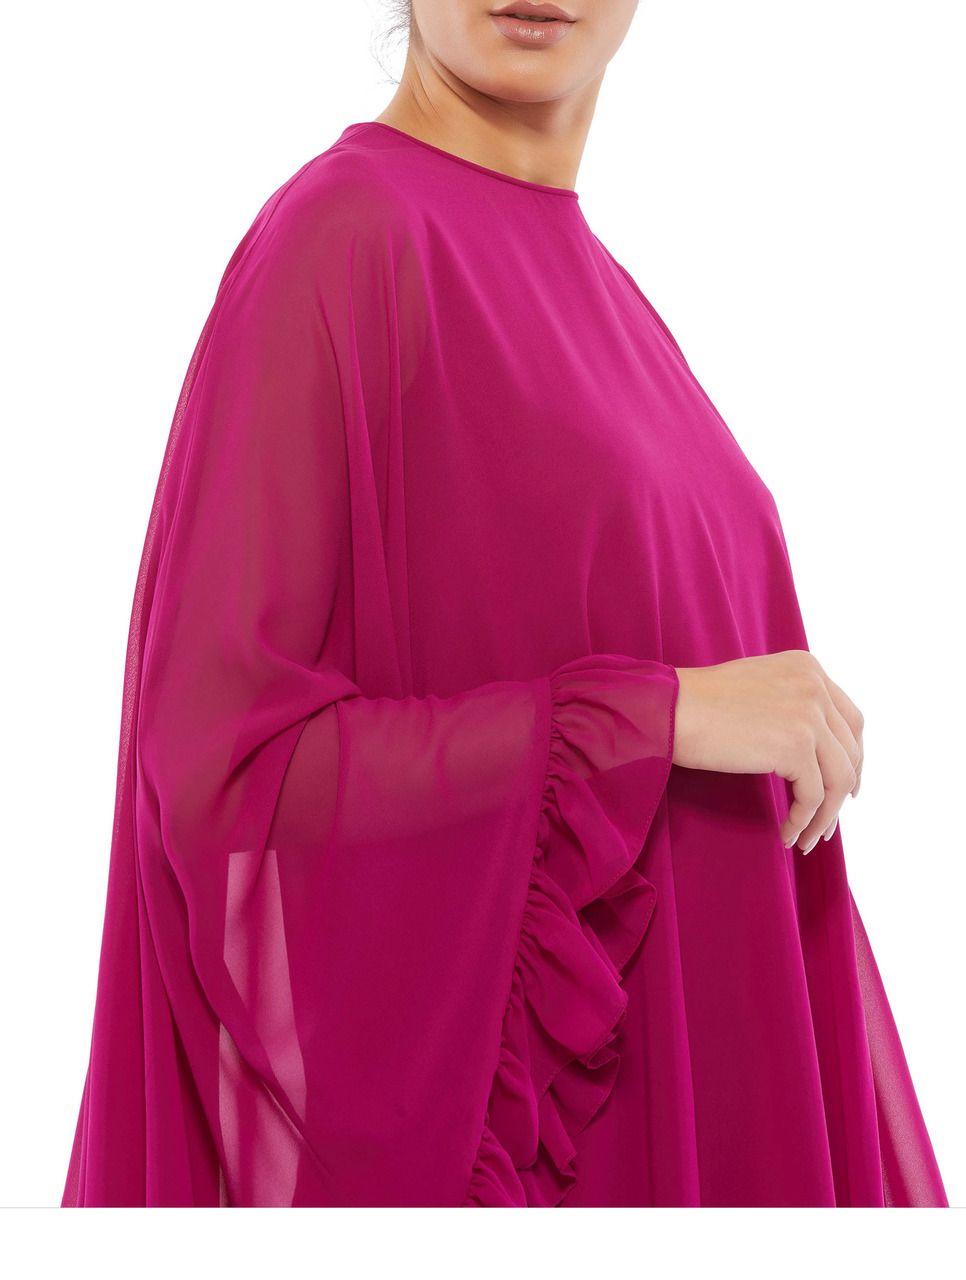 Ieena for Mac Duggal 554071 Cape Sleeve Tent Dress - MadameBridal.com